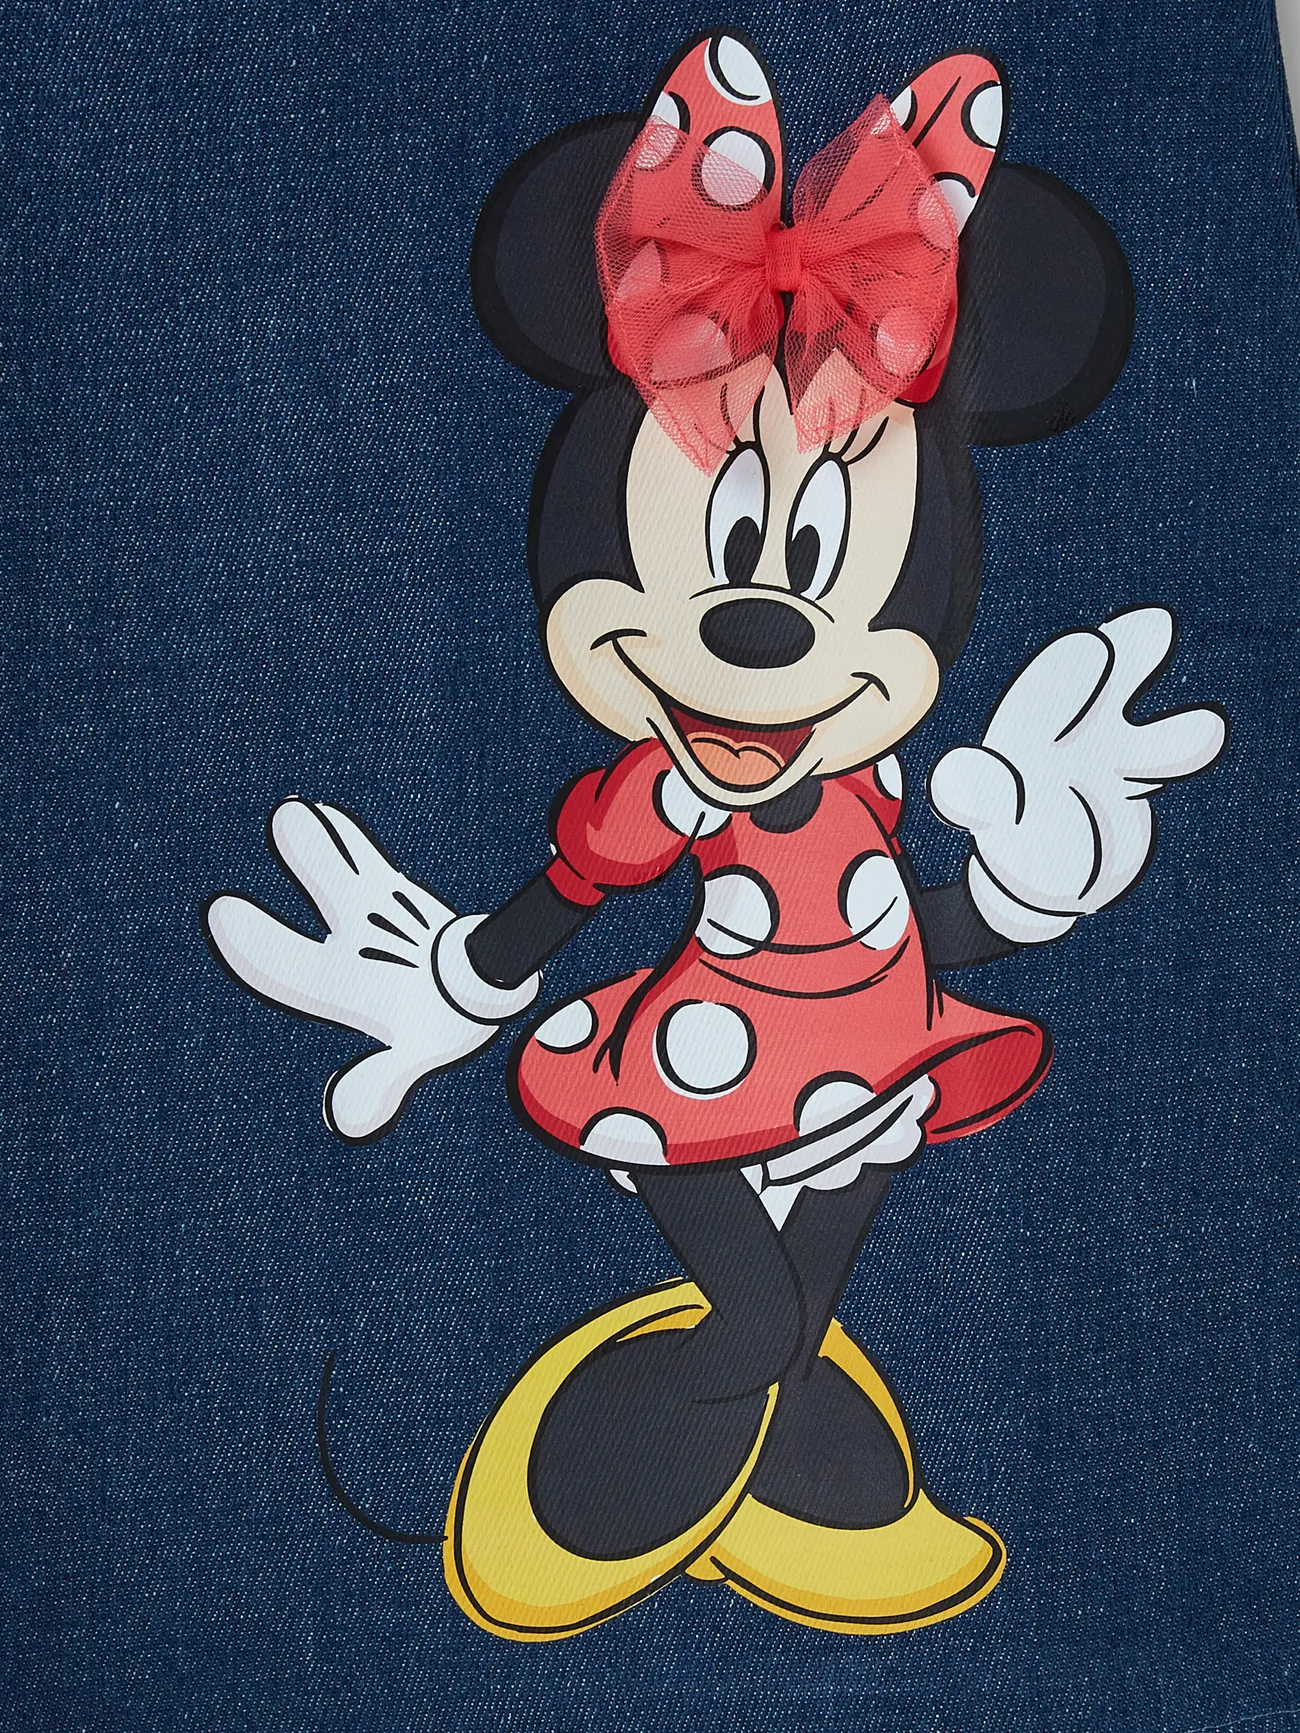 Disney Mickey and Friends Enfant en bas âge Fille Bouton Enfantin Robes Un jean bleu big image 1